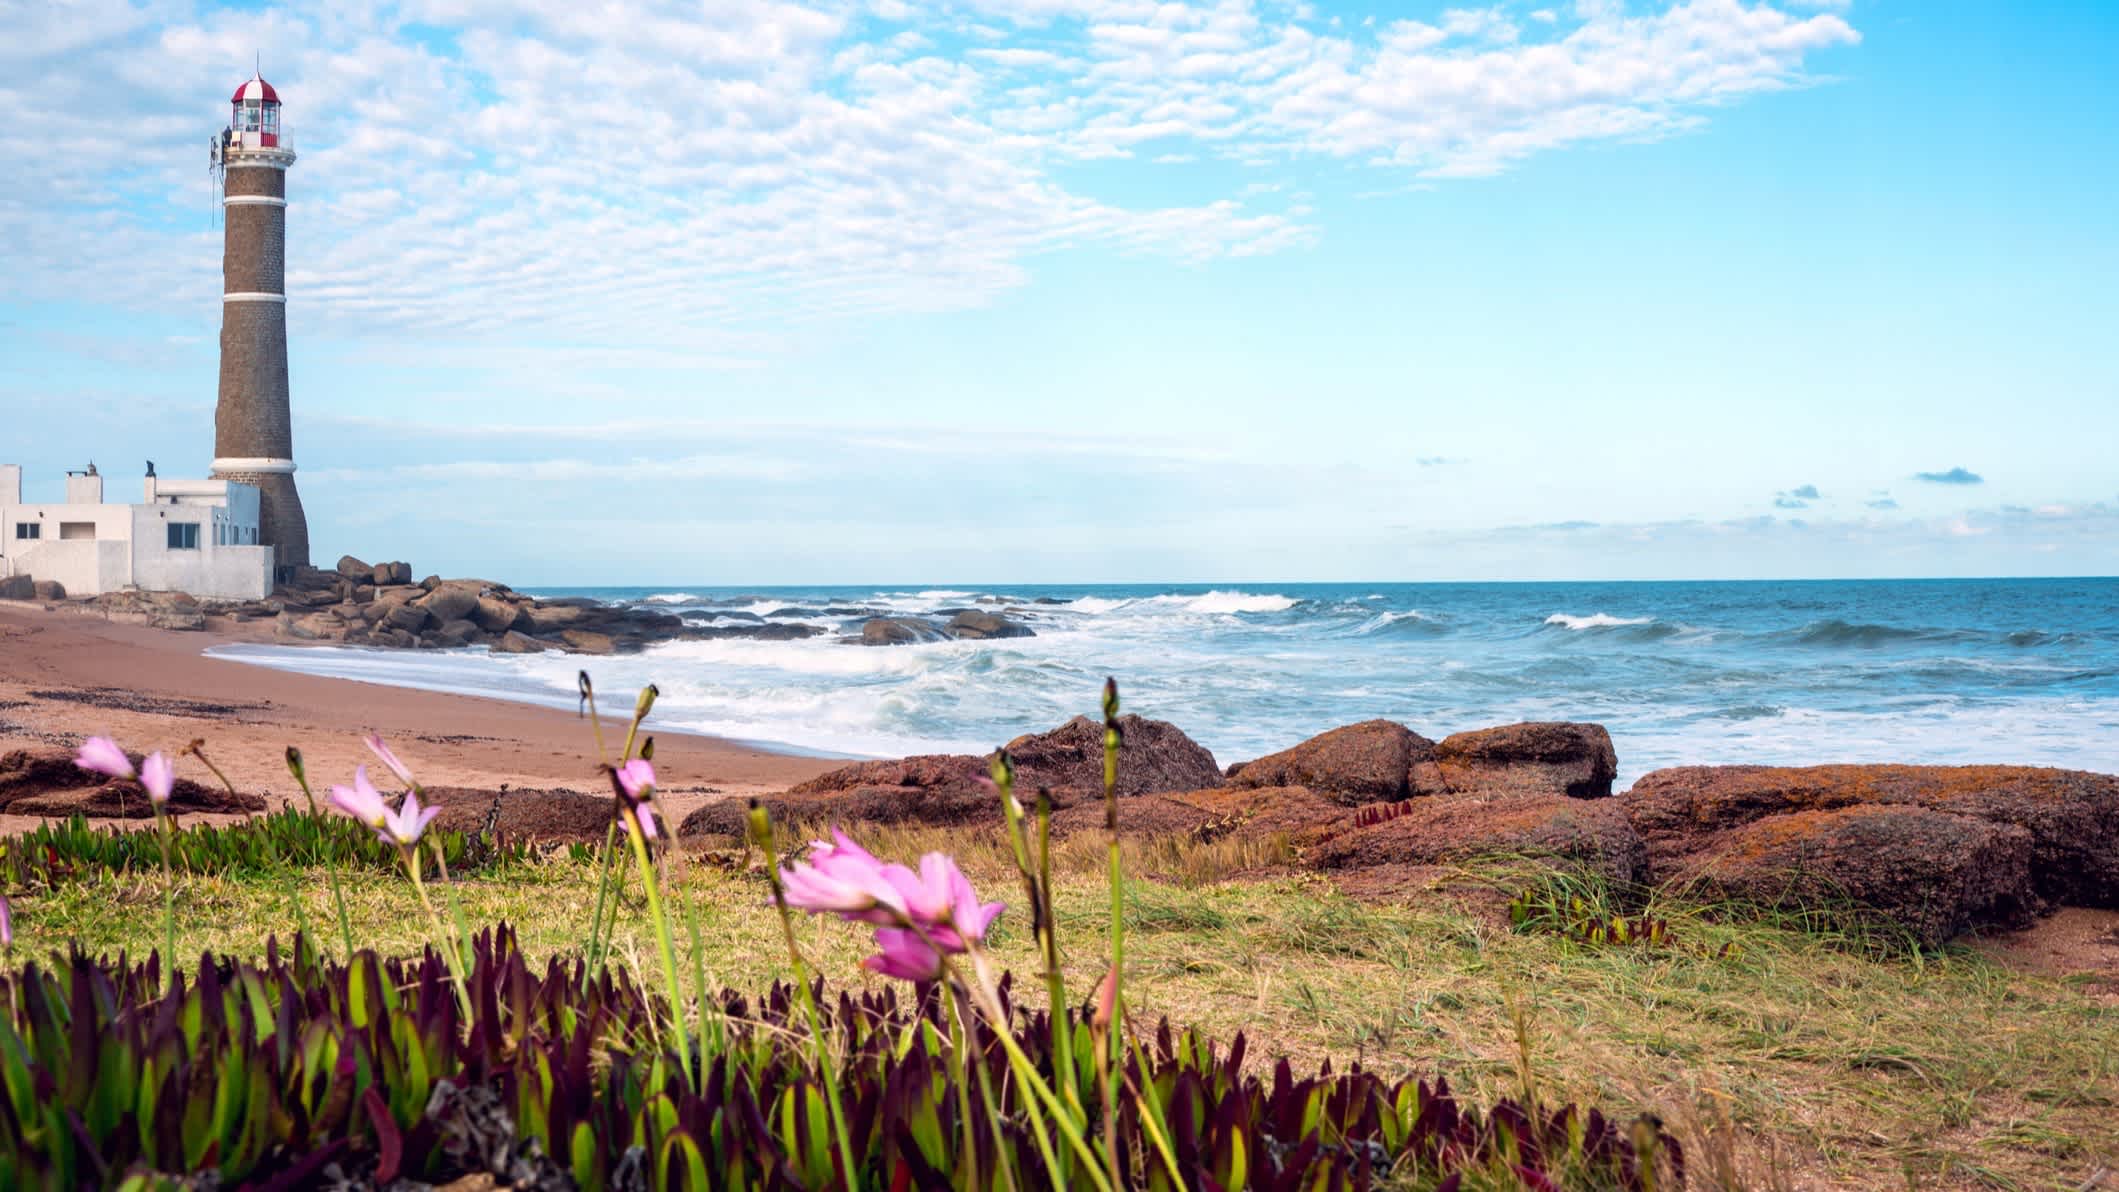 Leuchtturm in José Ignacio, José Ignacio, Uruguay mit Rosinen Blumen im Bild sowie Ausblick auf das Meer.